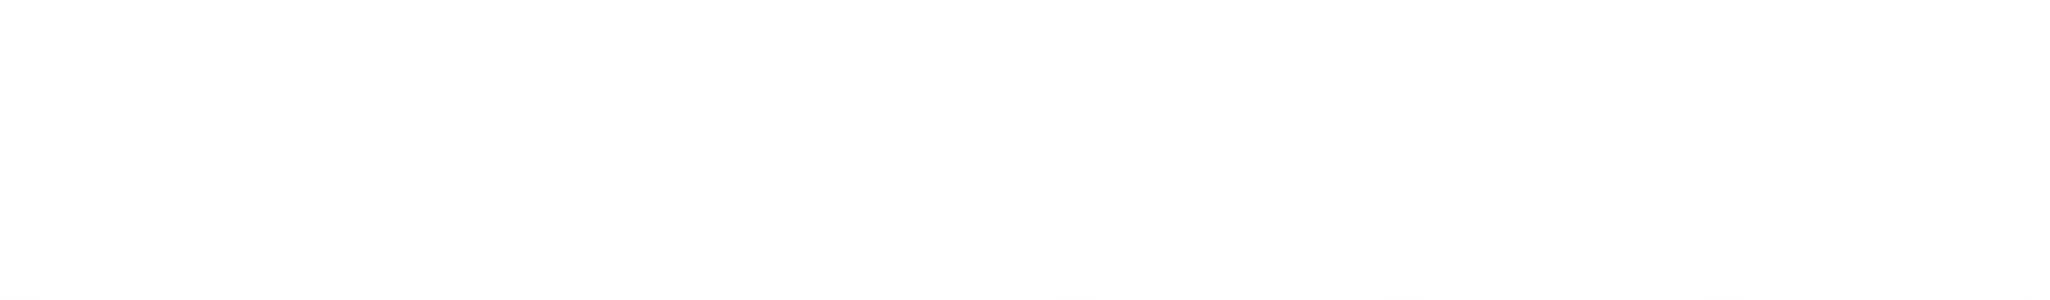 Matteo Bocelli Official Store logo